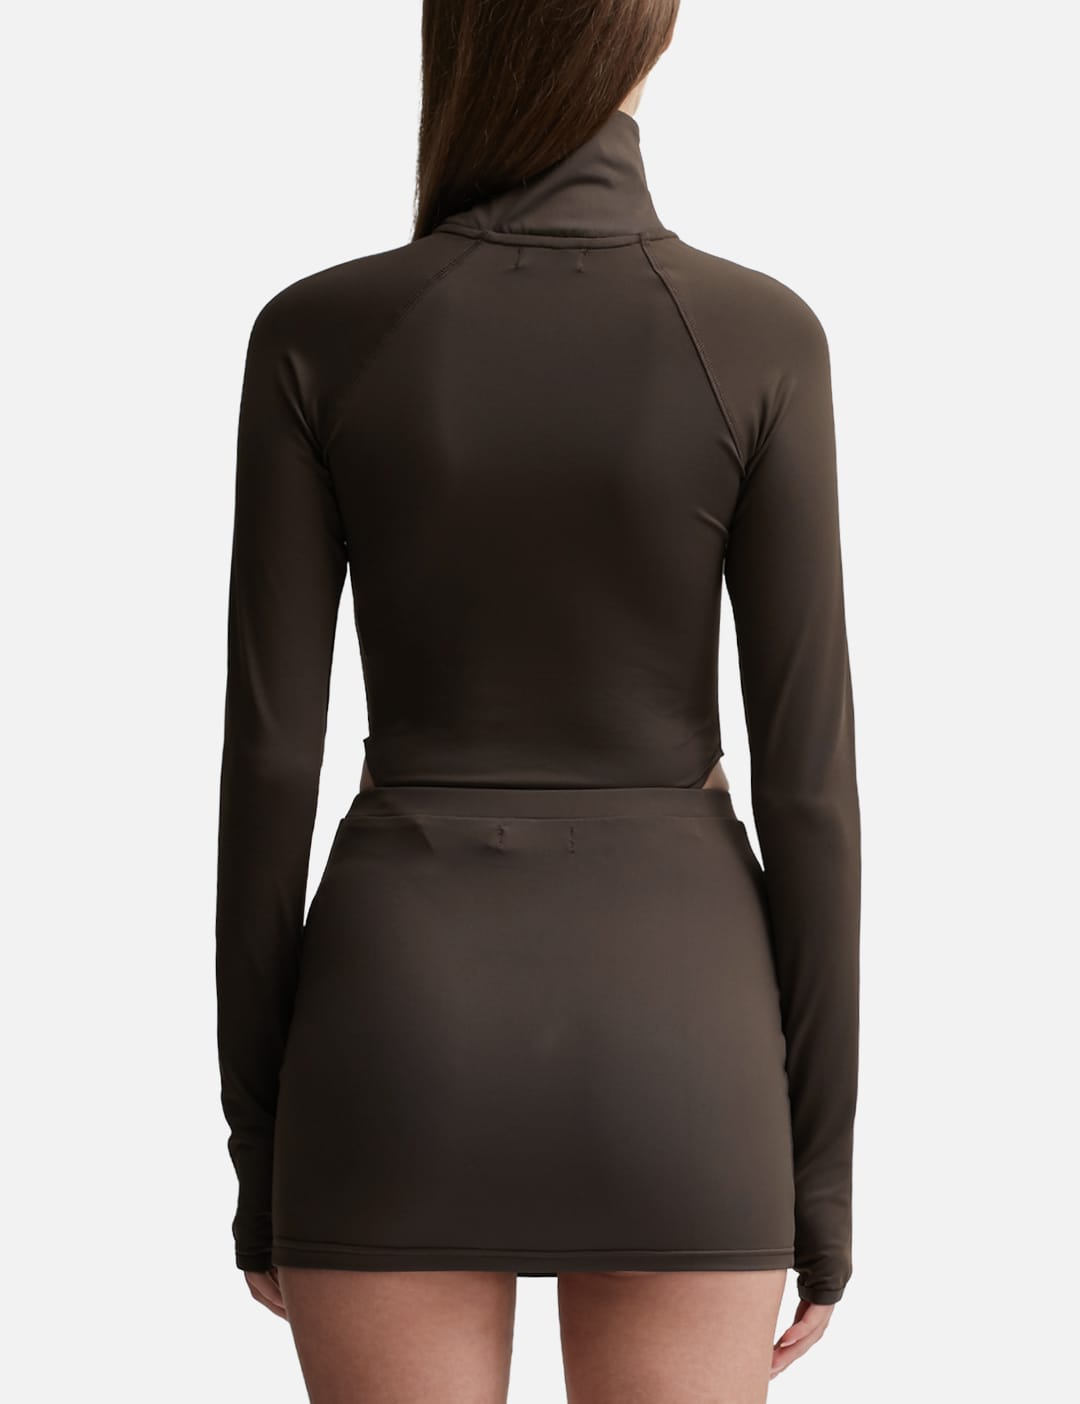 PRIX WORKSHOP - Knight Bodysuit | HBX - Globally Curated Fashion 